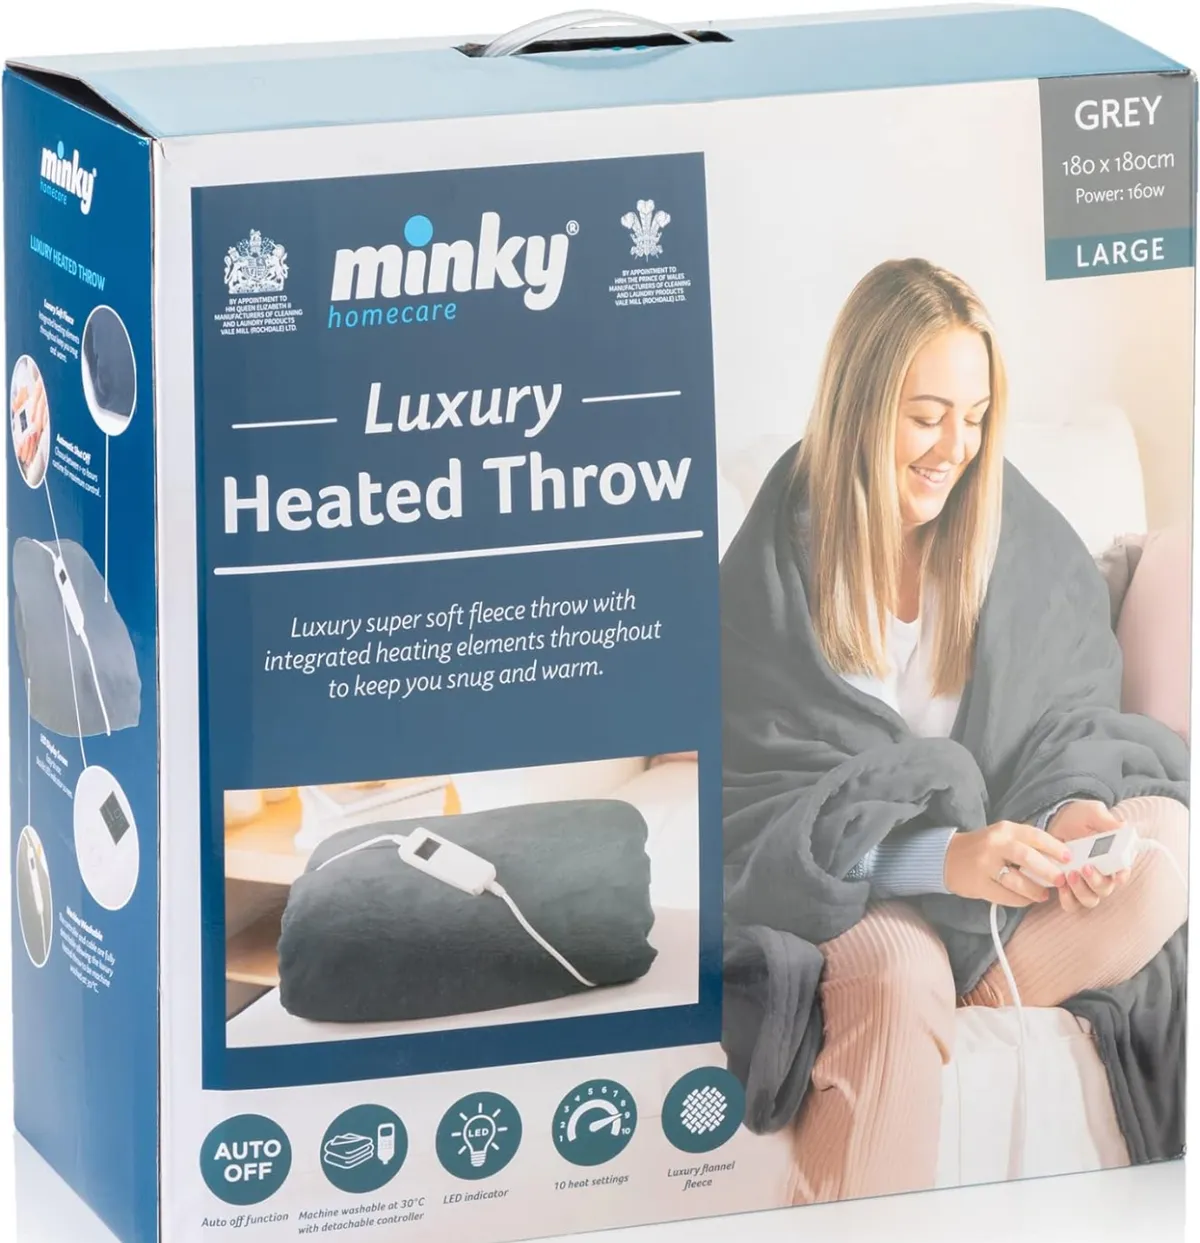 Minky Luxury Heated Throw Blanket - was £69.99 now £59.99 (save 14%)